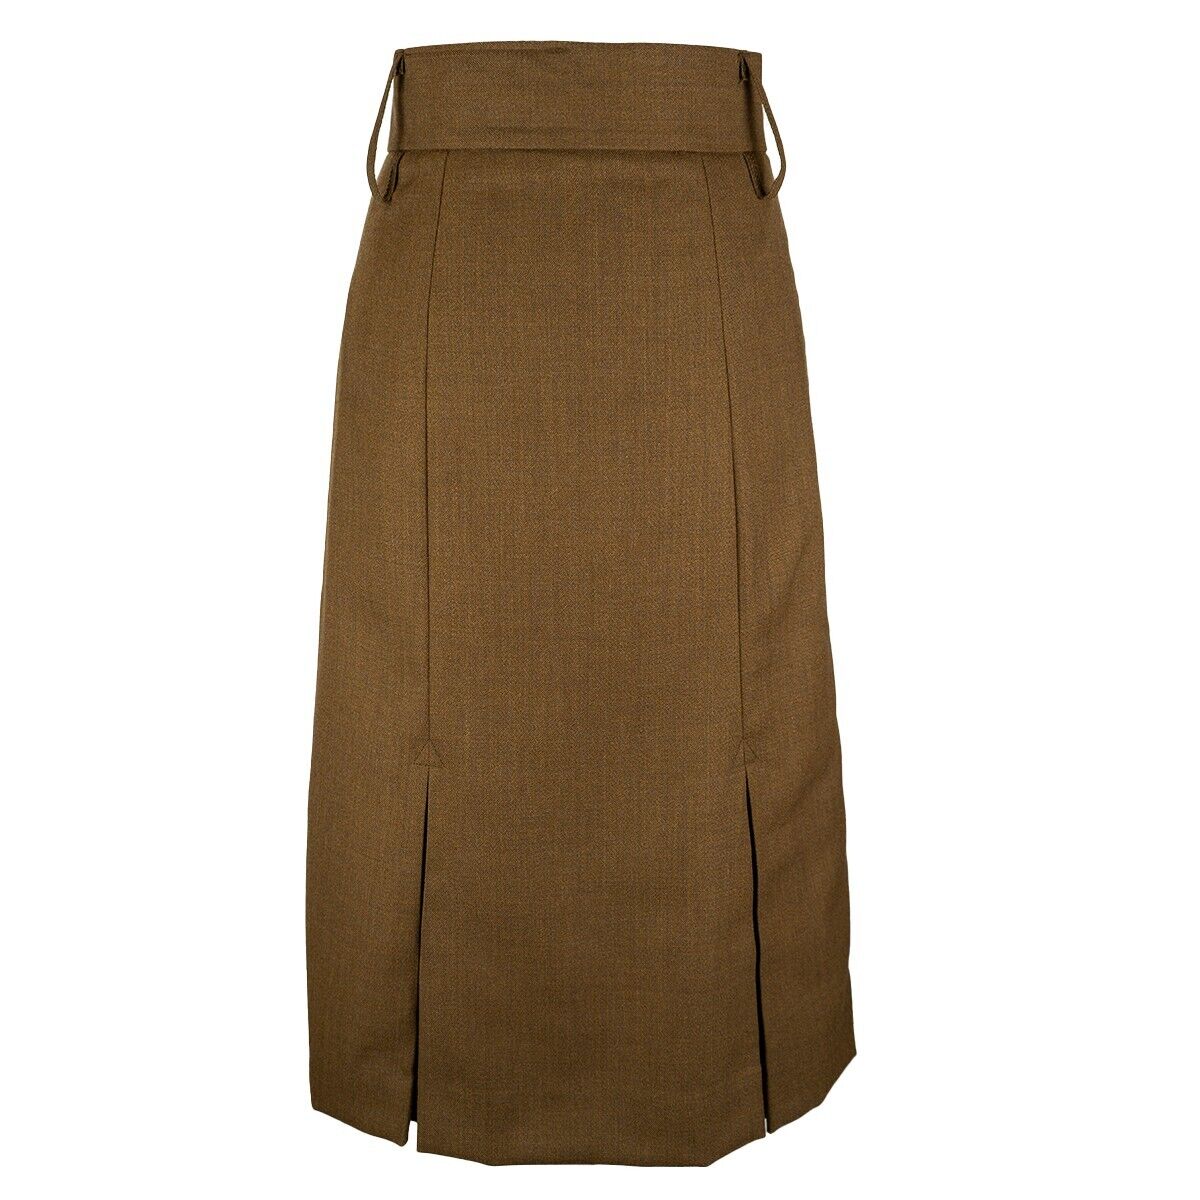 Original British Army Dress Skirt- 